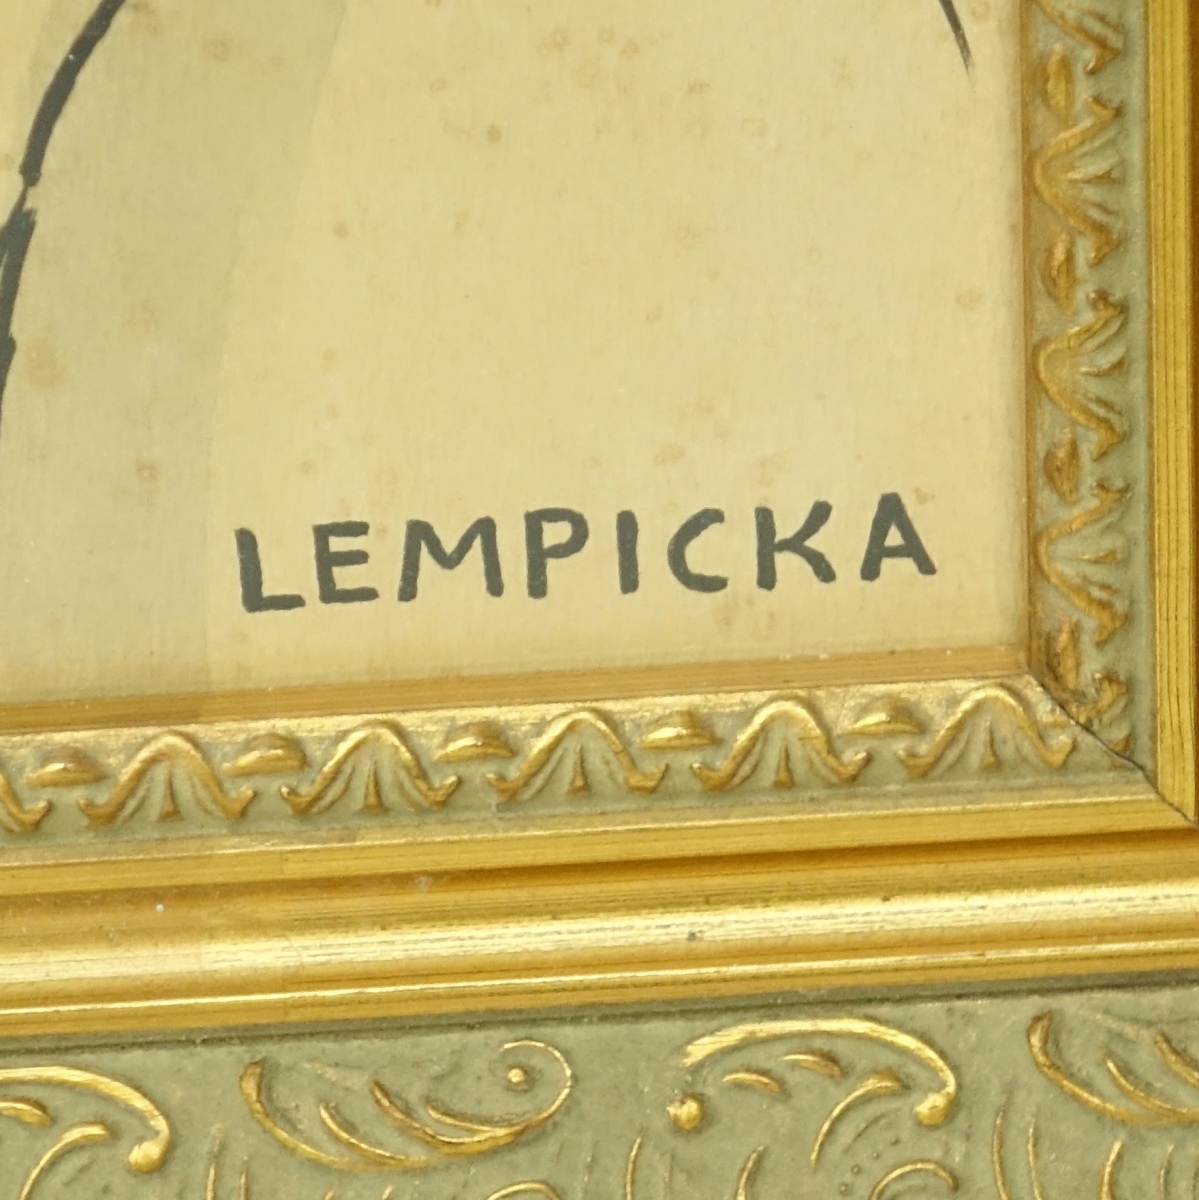 Tamara Lempicka, Polish (1898-1980)